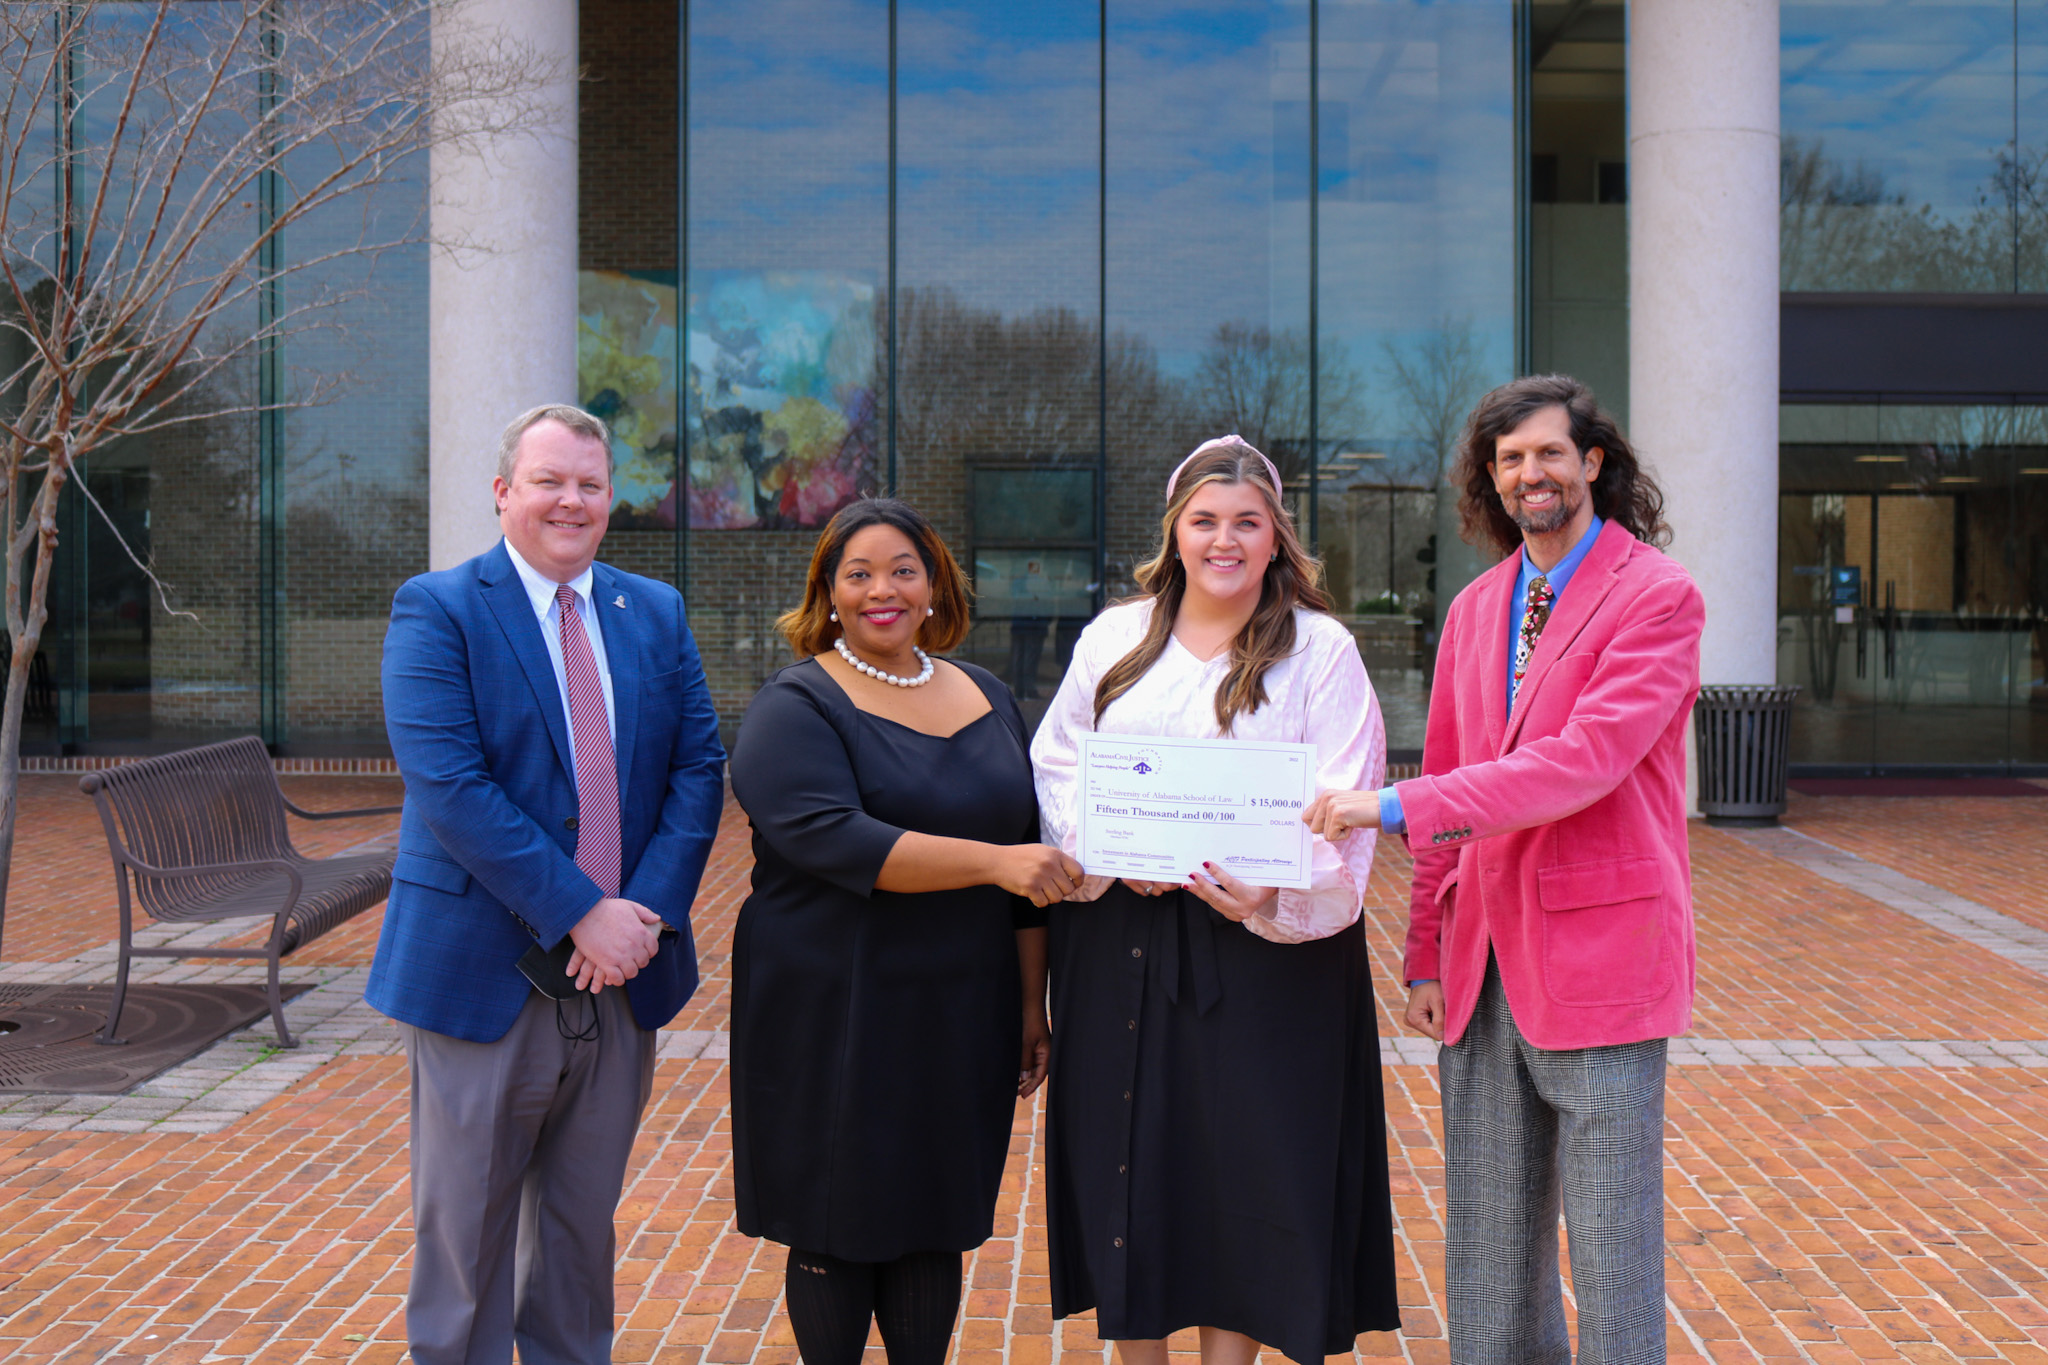 Alabama Civil Justice Foundation awards $15,000 to support the Alabama Law Summer Scholar's Program